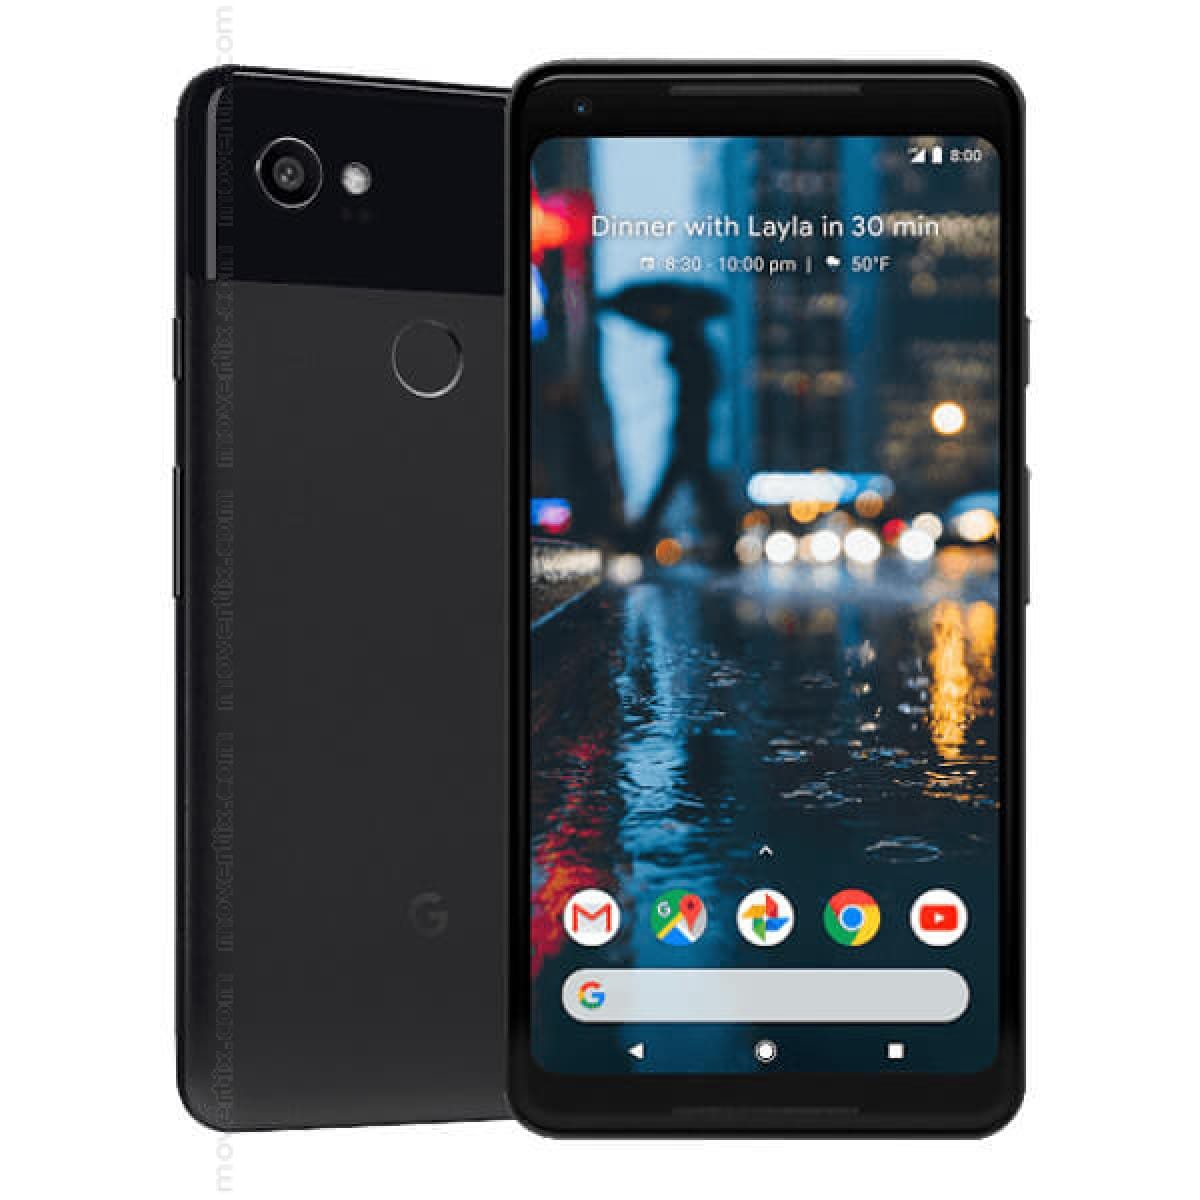 Google Pixel 2 XL - 128 GB - Just Black - Unlocked - GSM - UK Im